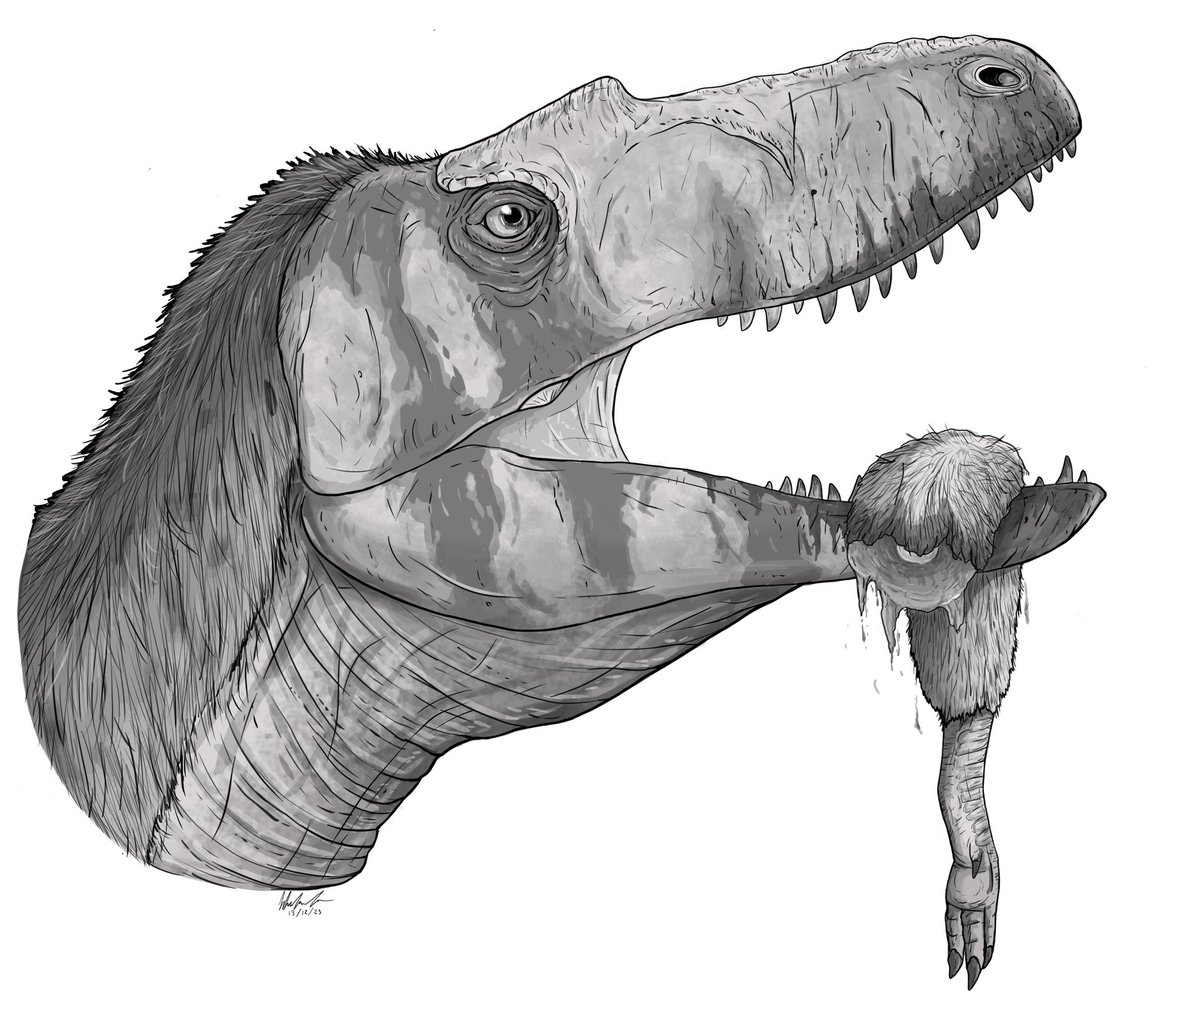 I'm a little late to the Gorgosaurus news, but here's a quick piece I did for @BenGThomas42 latest video. Gorgosaurus enjoying a little snack. #palaeontology #paleoart